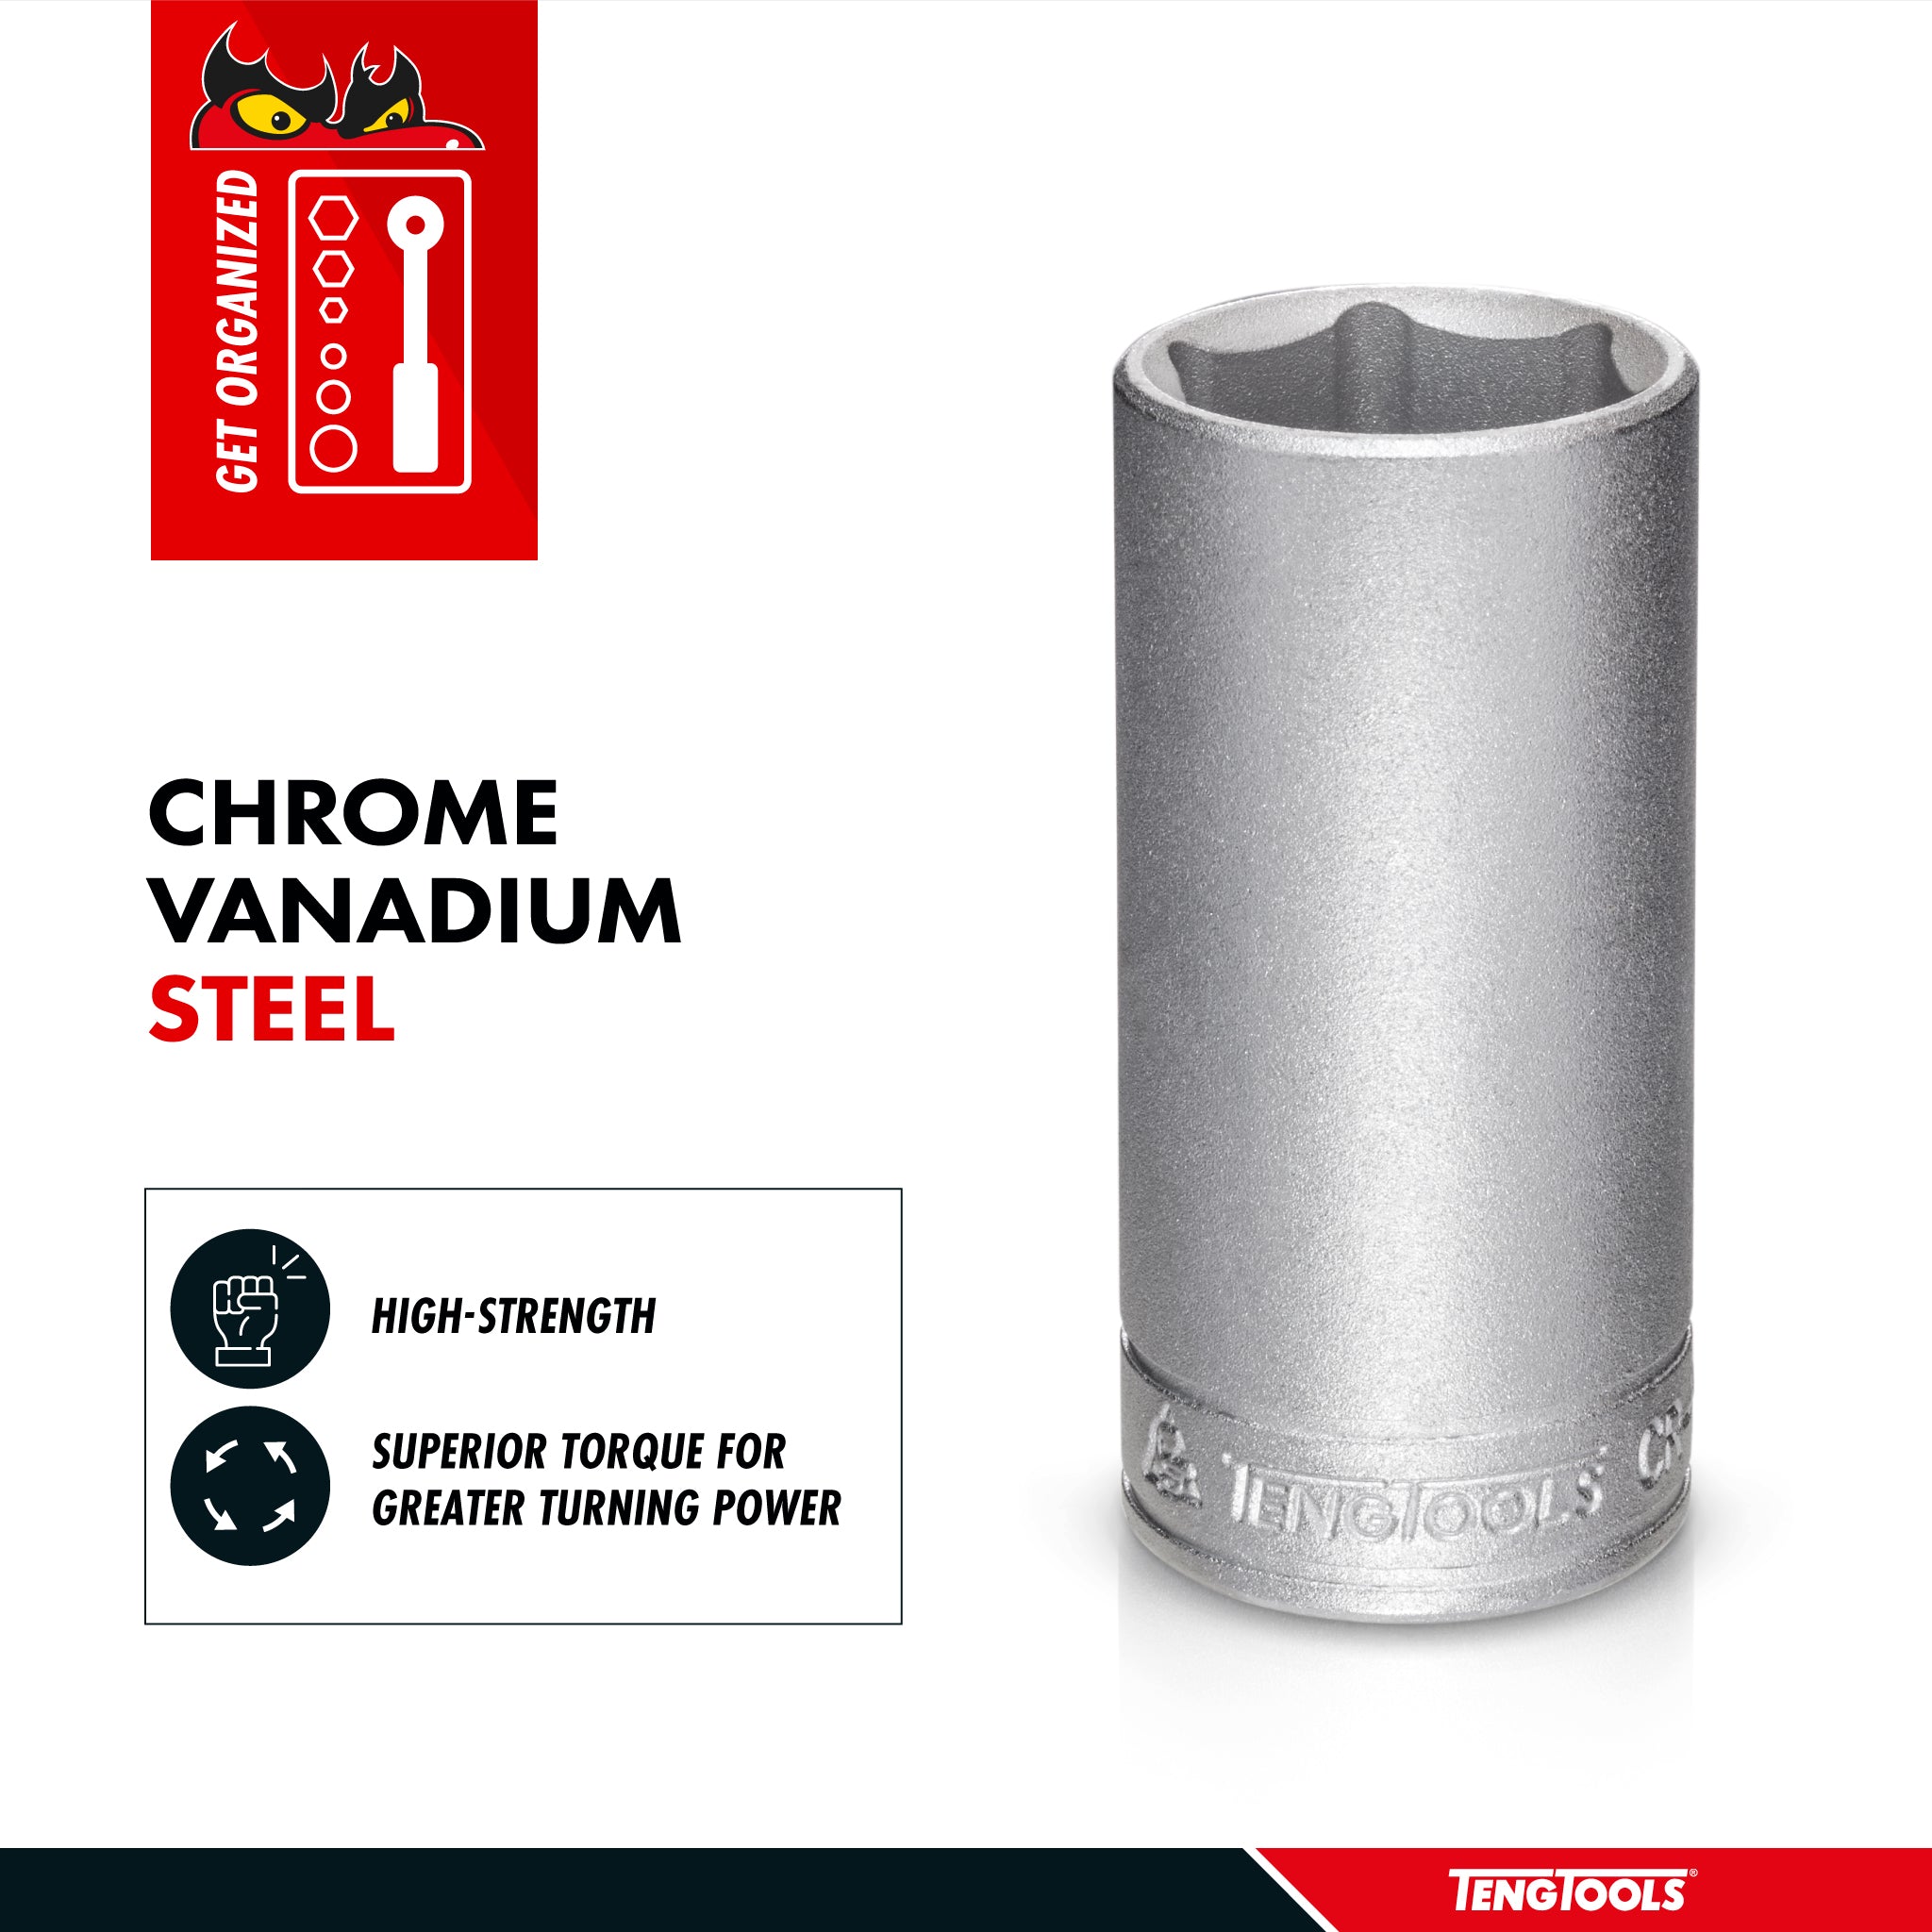 Teng Tools 3/8 Inch Drive 6 Point Metric Deep Chrome Vanadium Sockets - 17mm